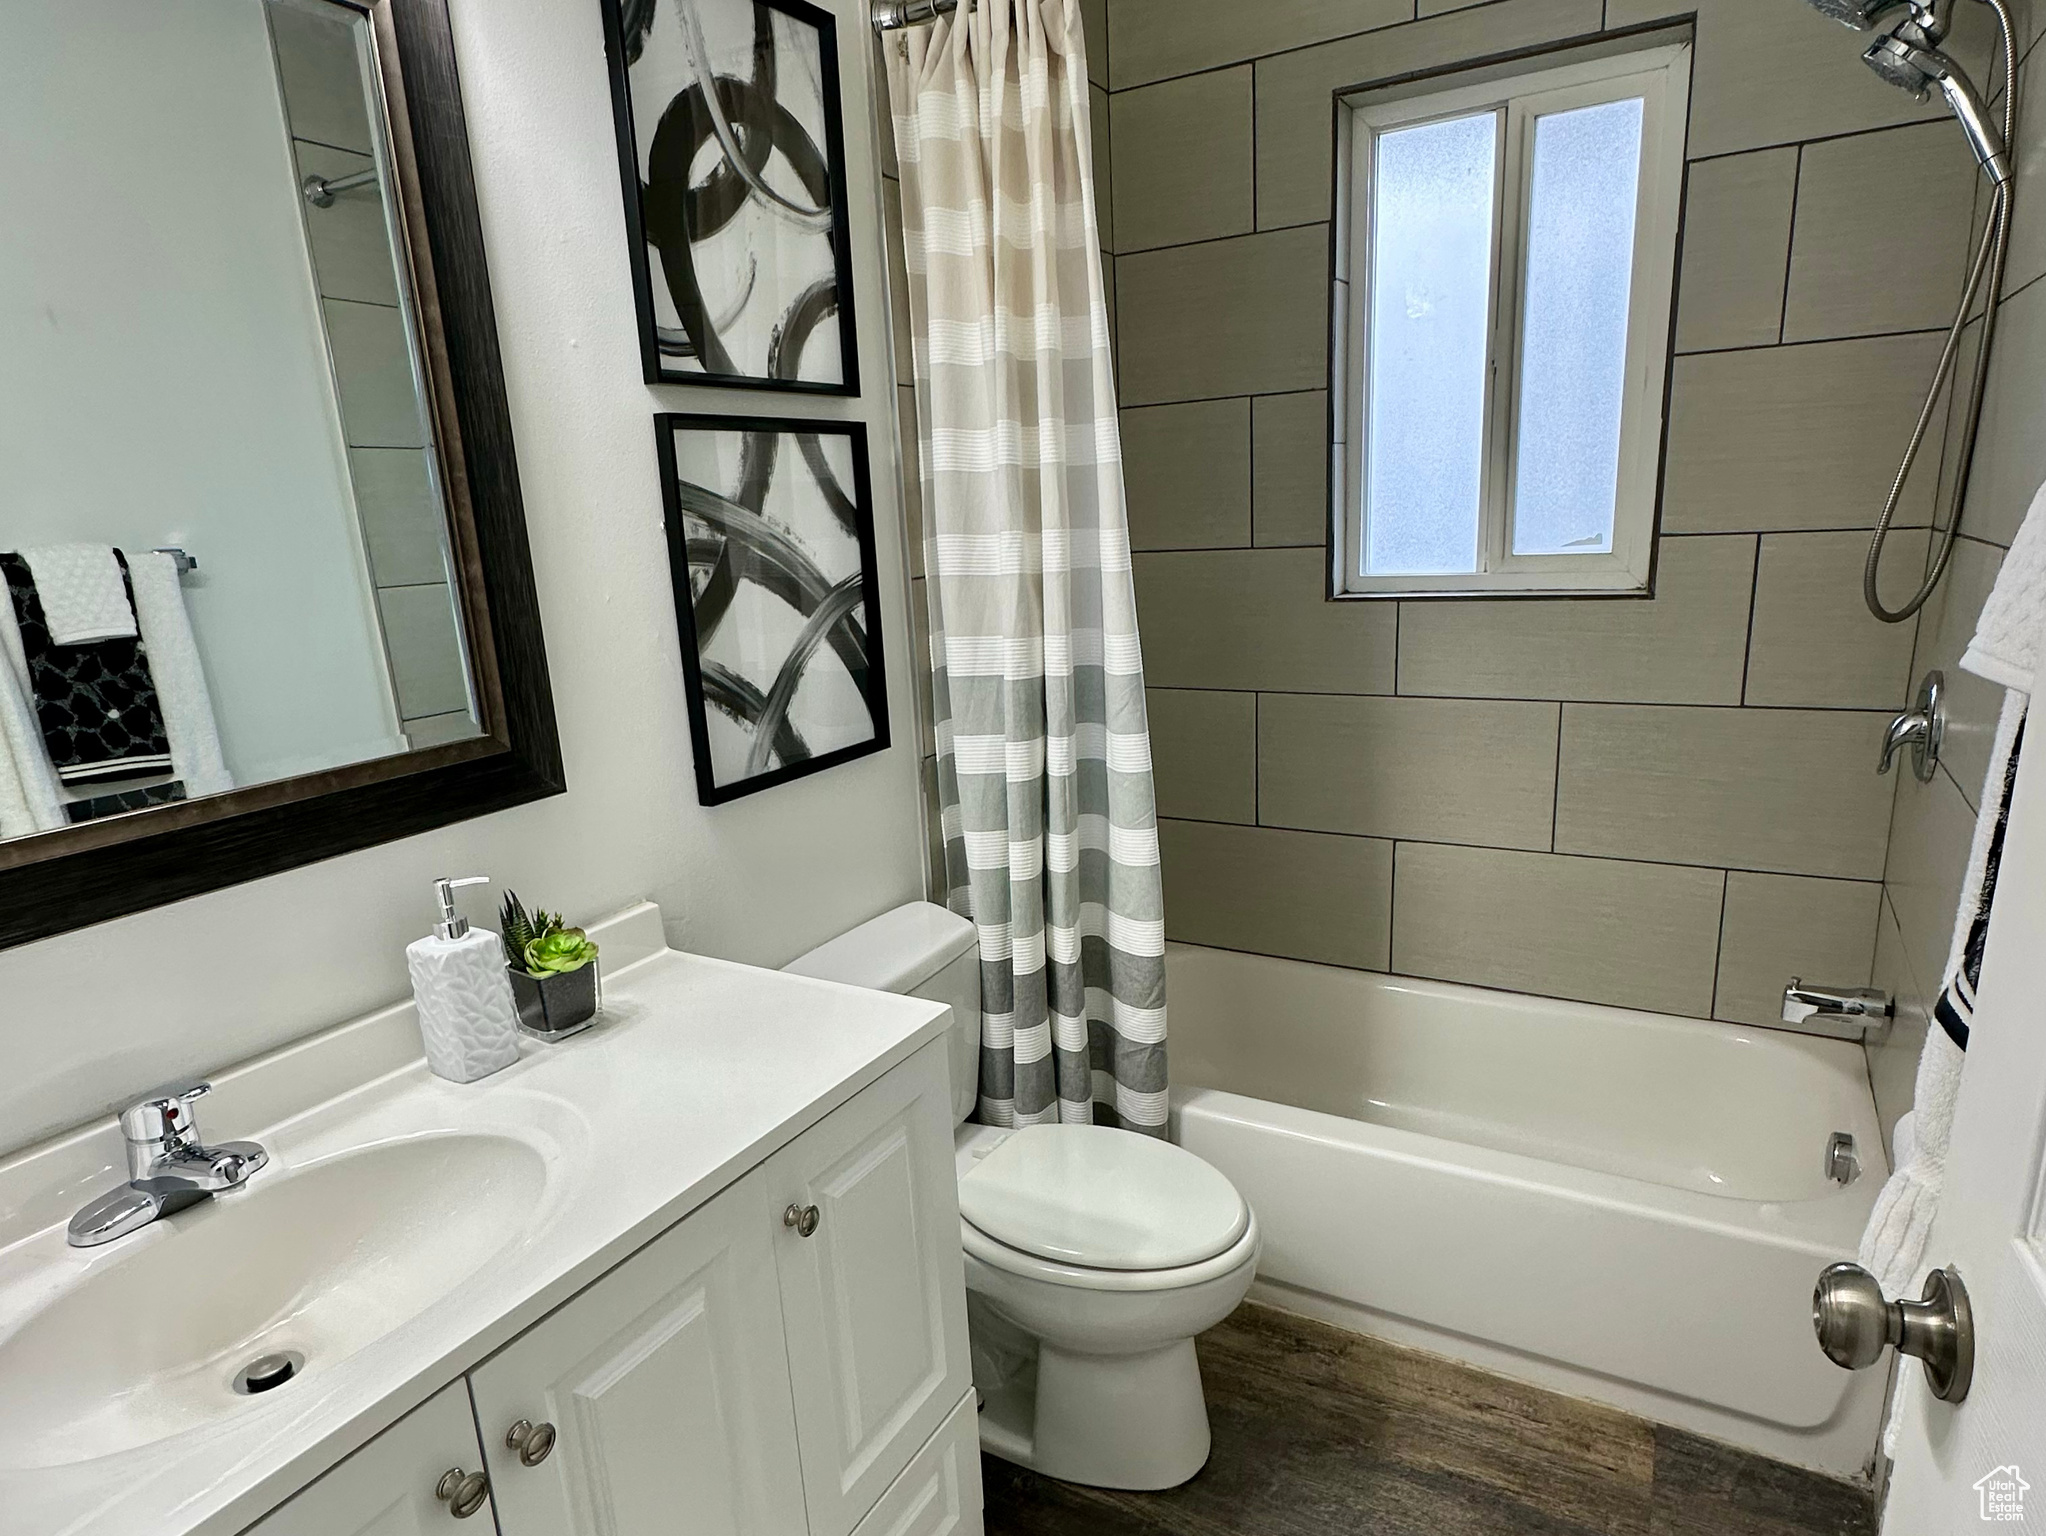 Full bathroom featuring shower / tub combo, toilet, vanity, and hardwood / wood-style floors